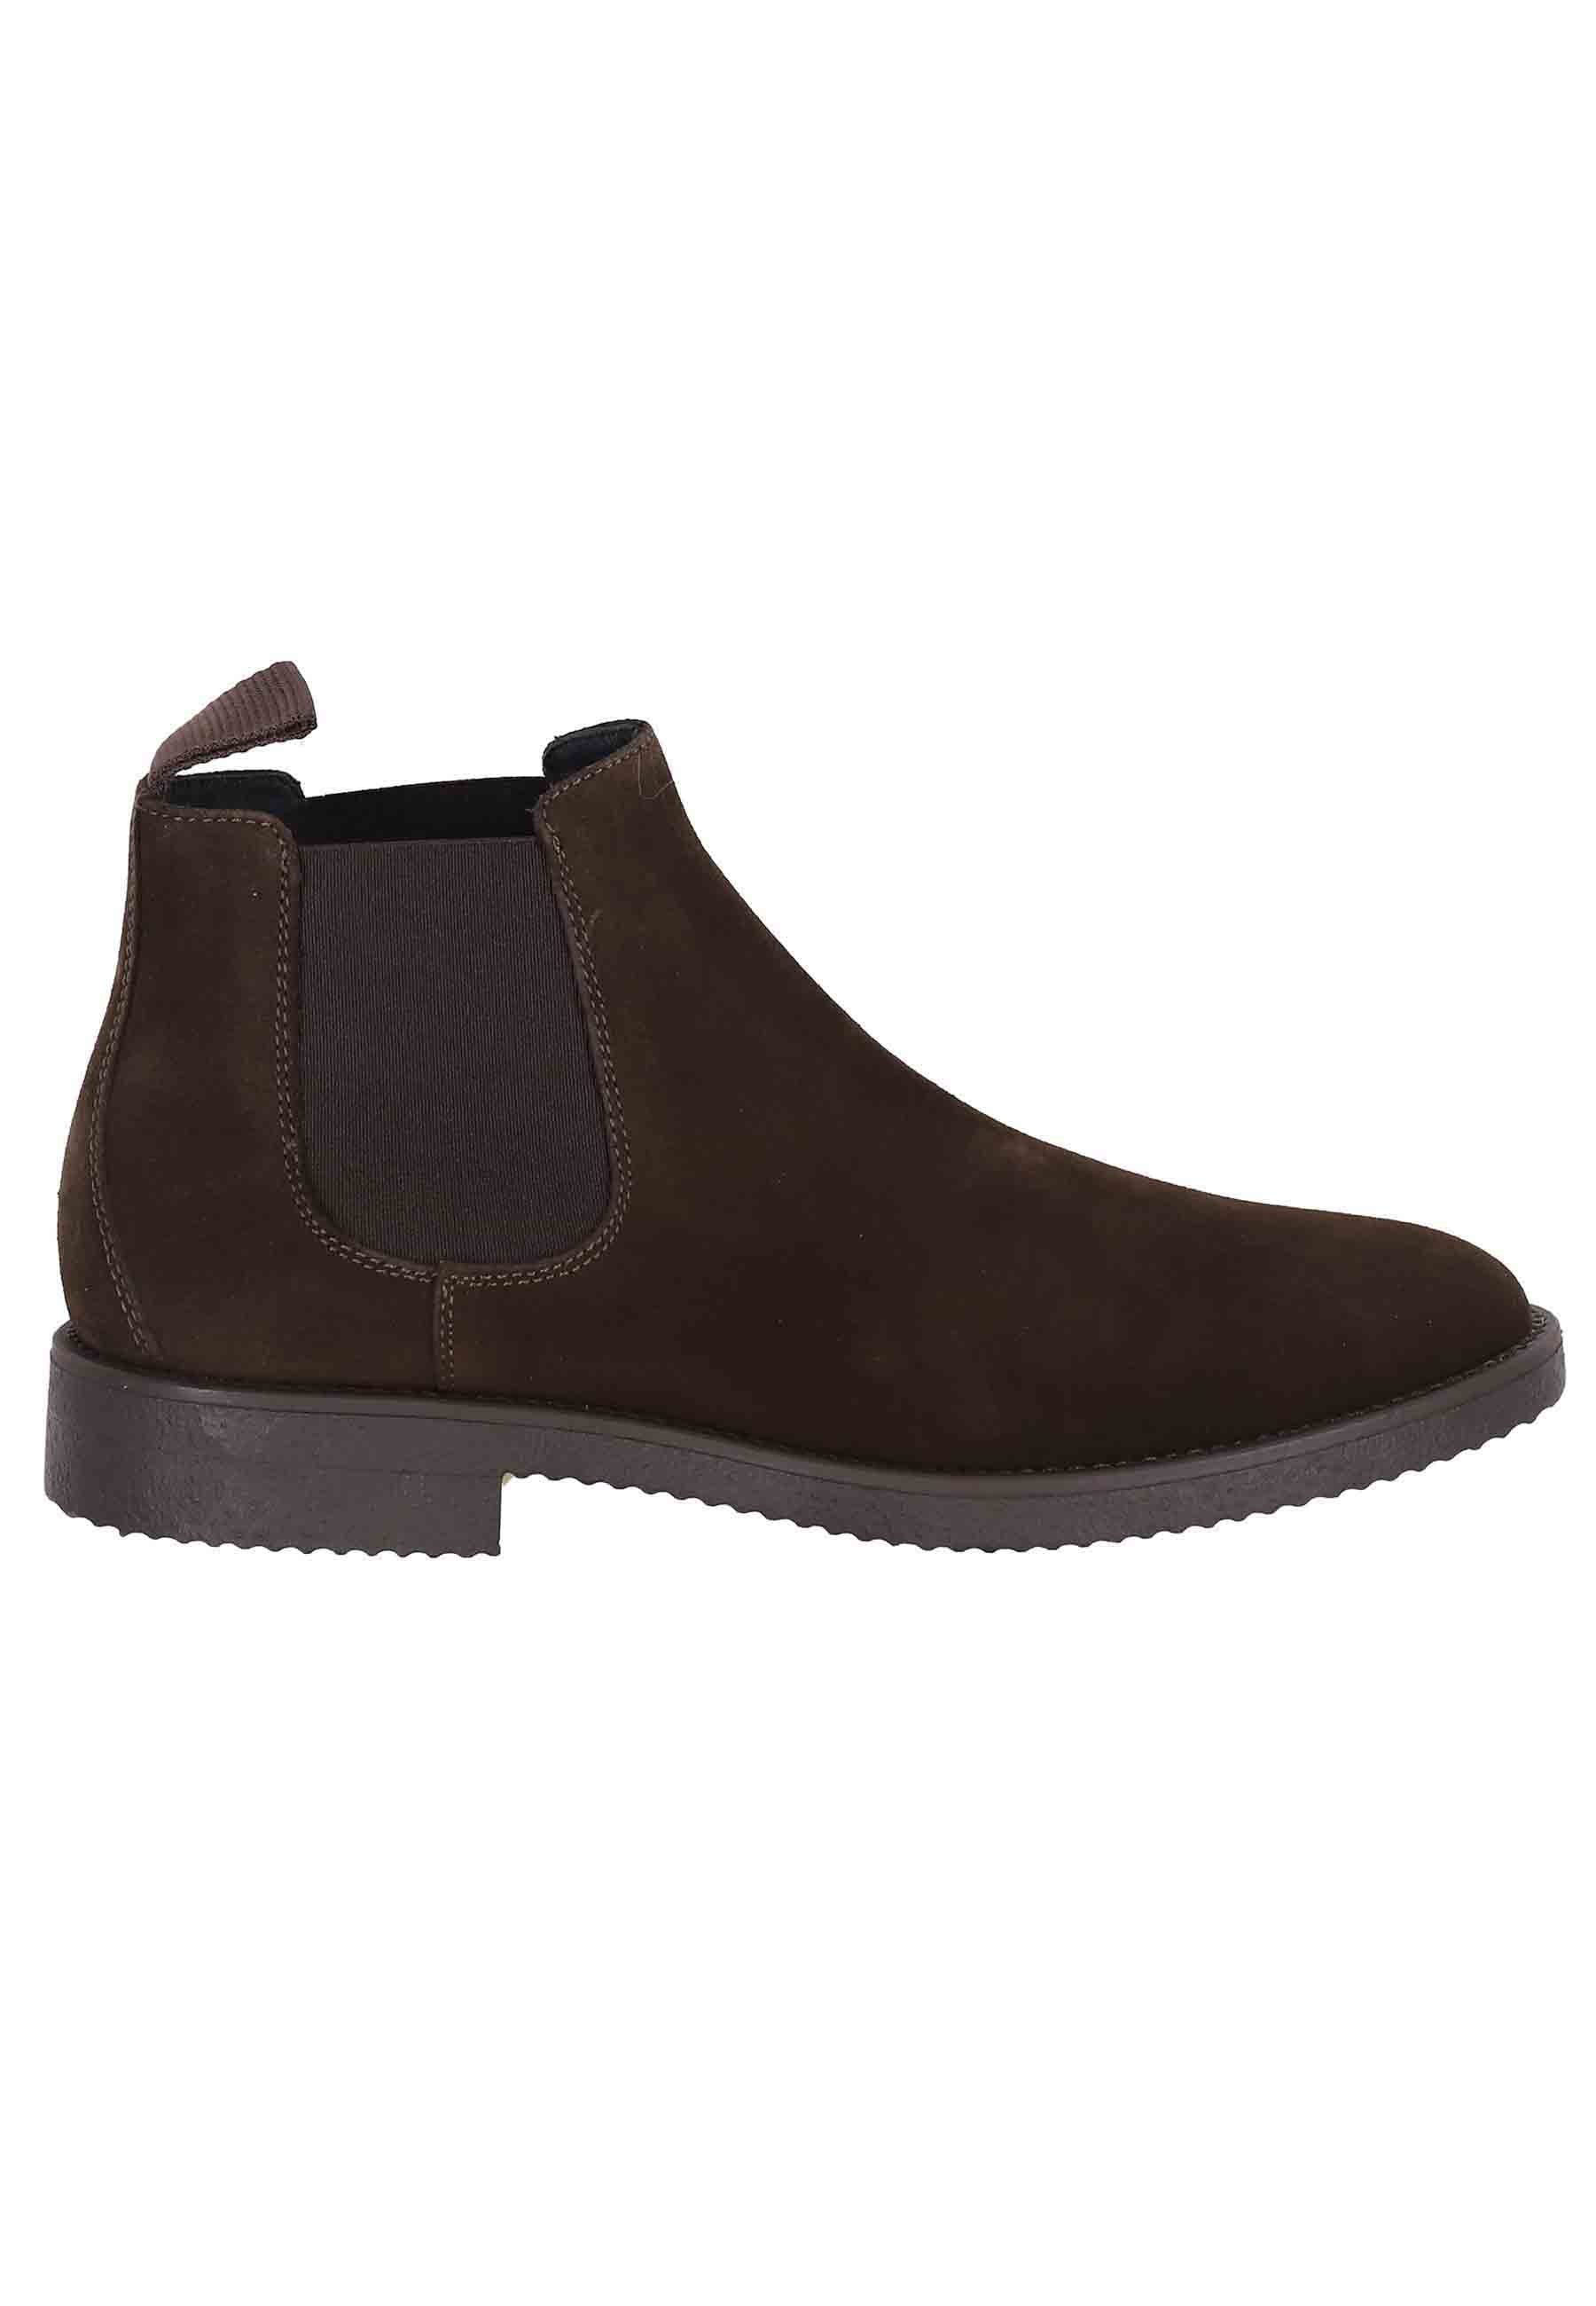 Men's Chelsea boots in dark brown suede with crepe sole